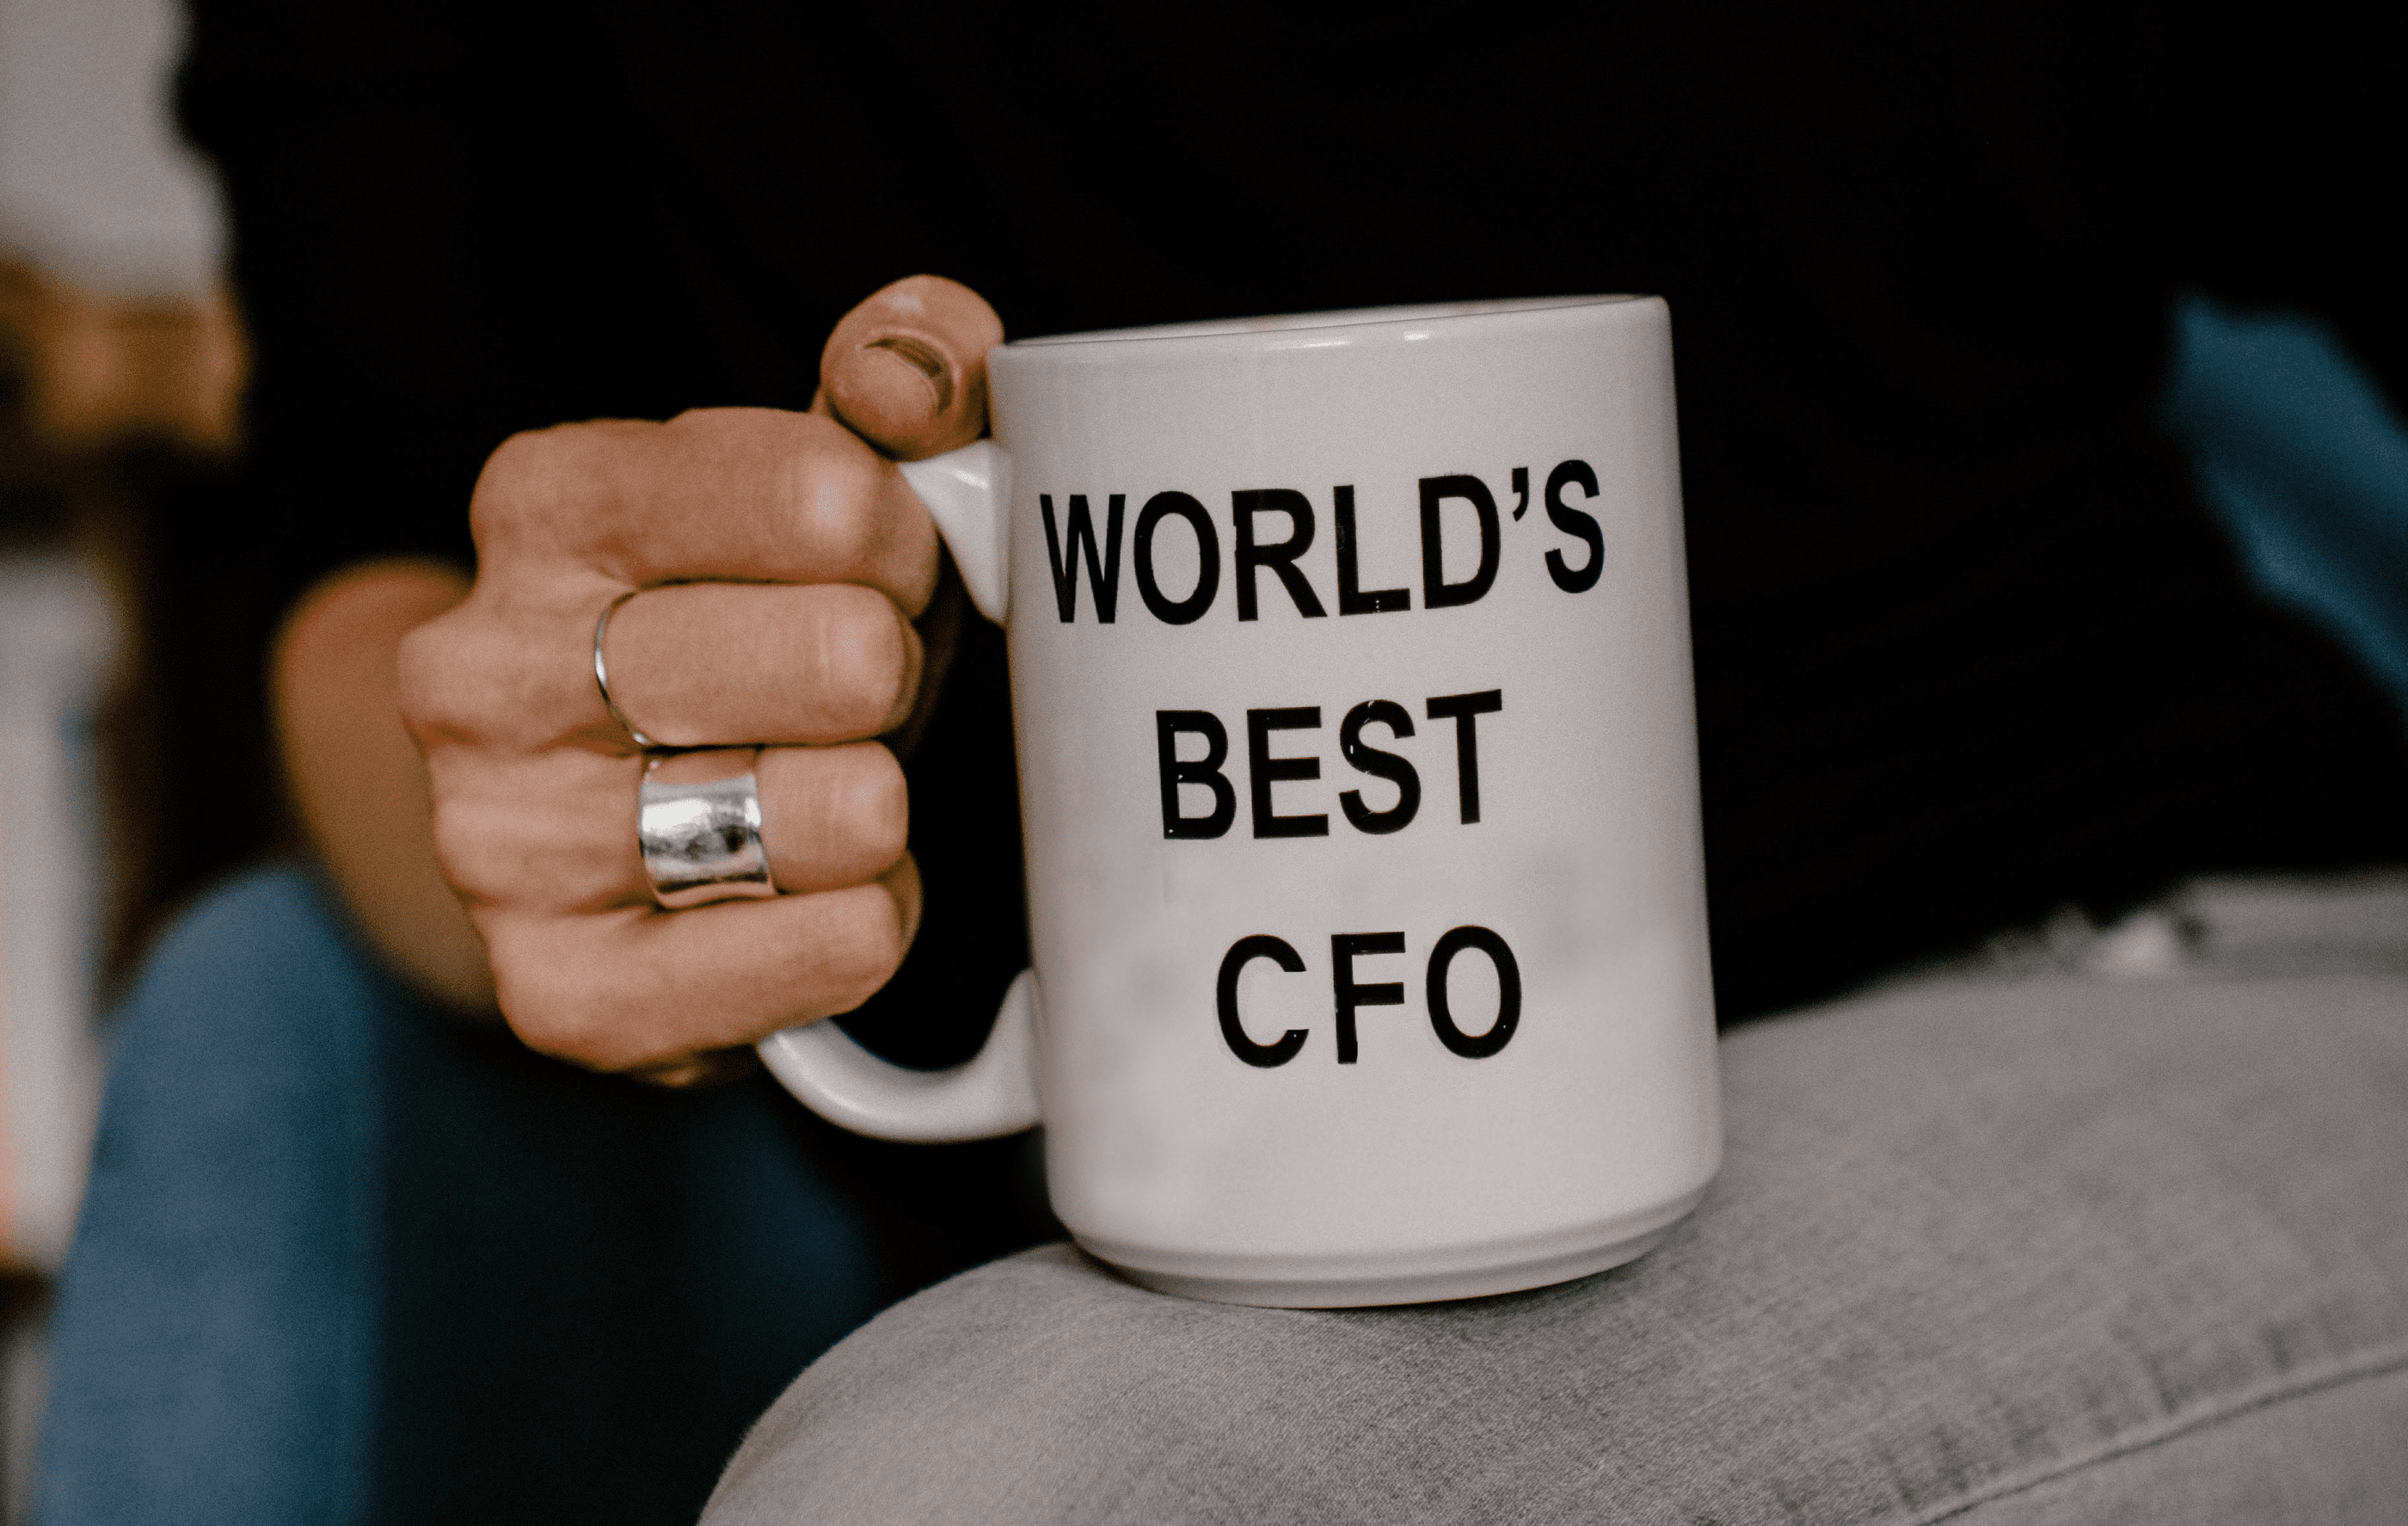 CFO – Chief eller Coach Financial Officer?